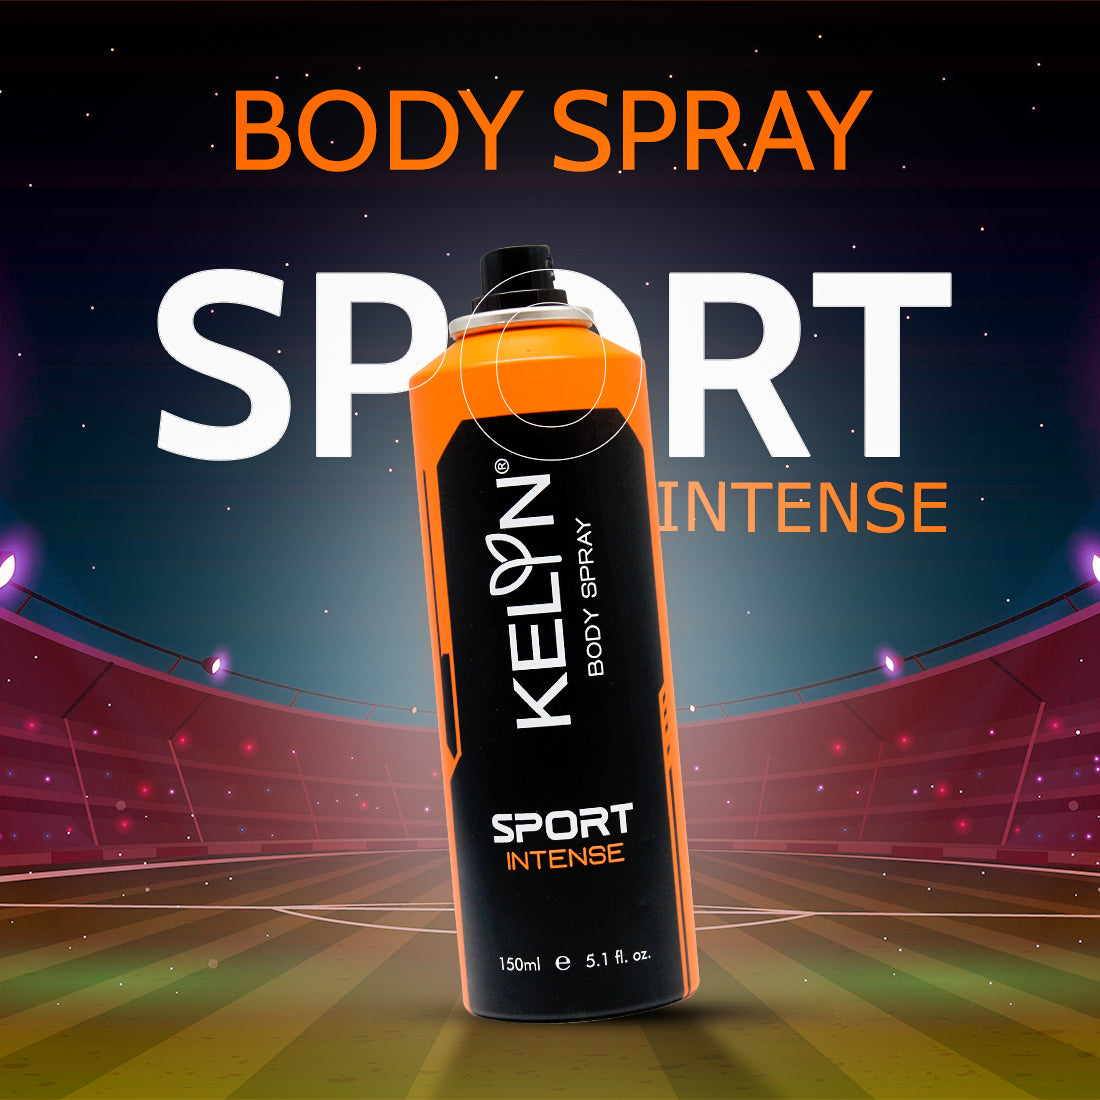 Kelyn Sports Active, Power, Rush, Intense Deodorants Body Spray (Pack of 4) 150ml each